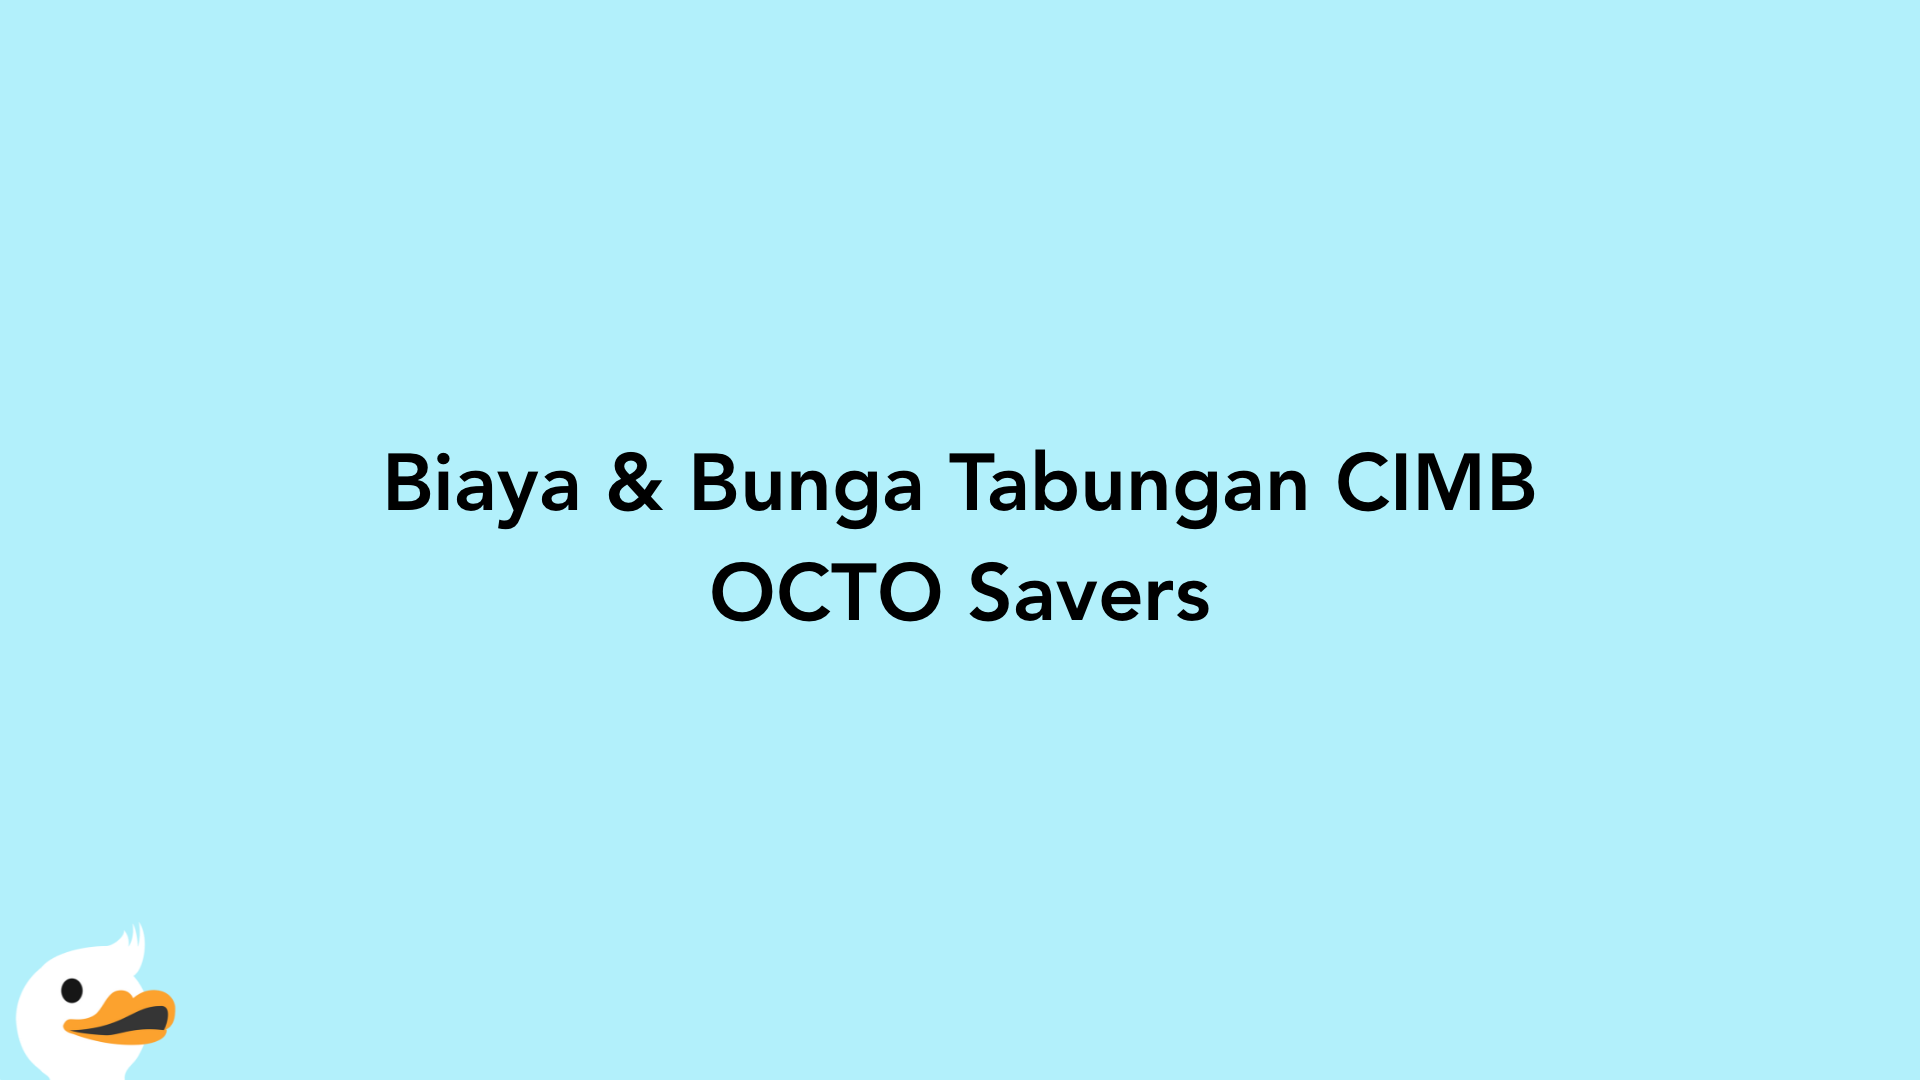 Biaya & Bunga Tabungan CIMB OCTO Savers